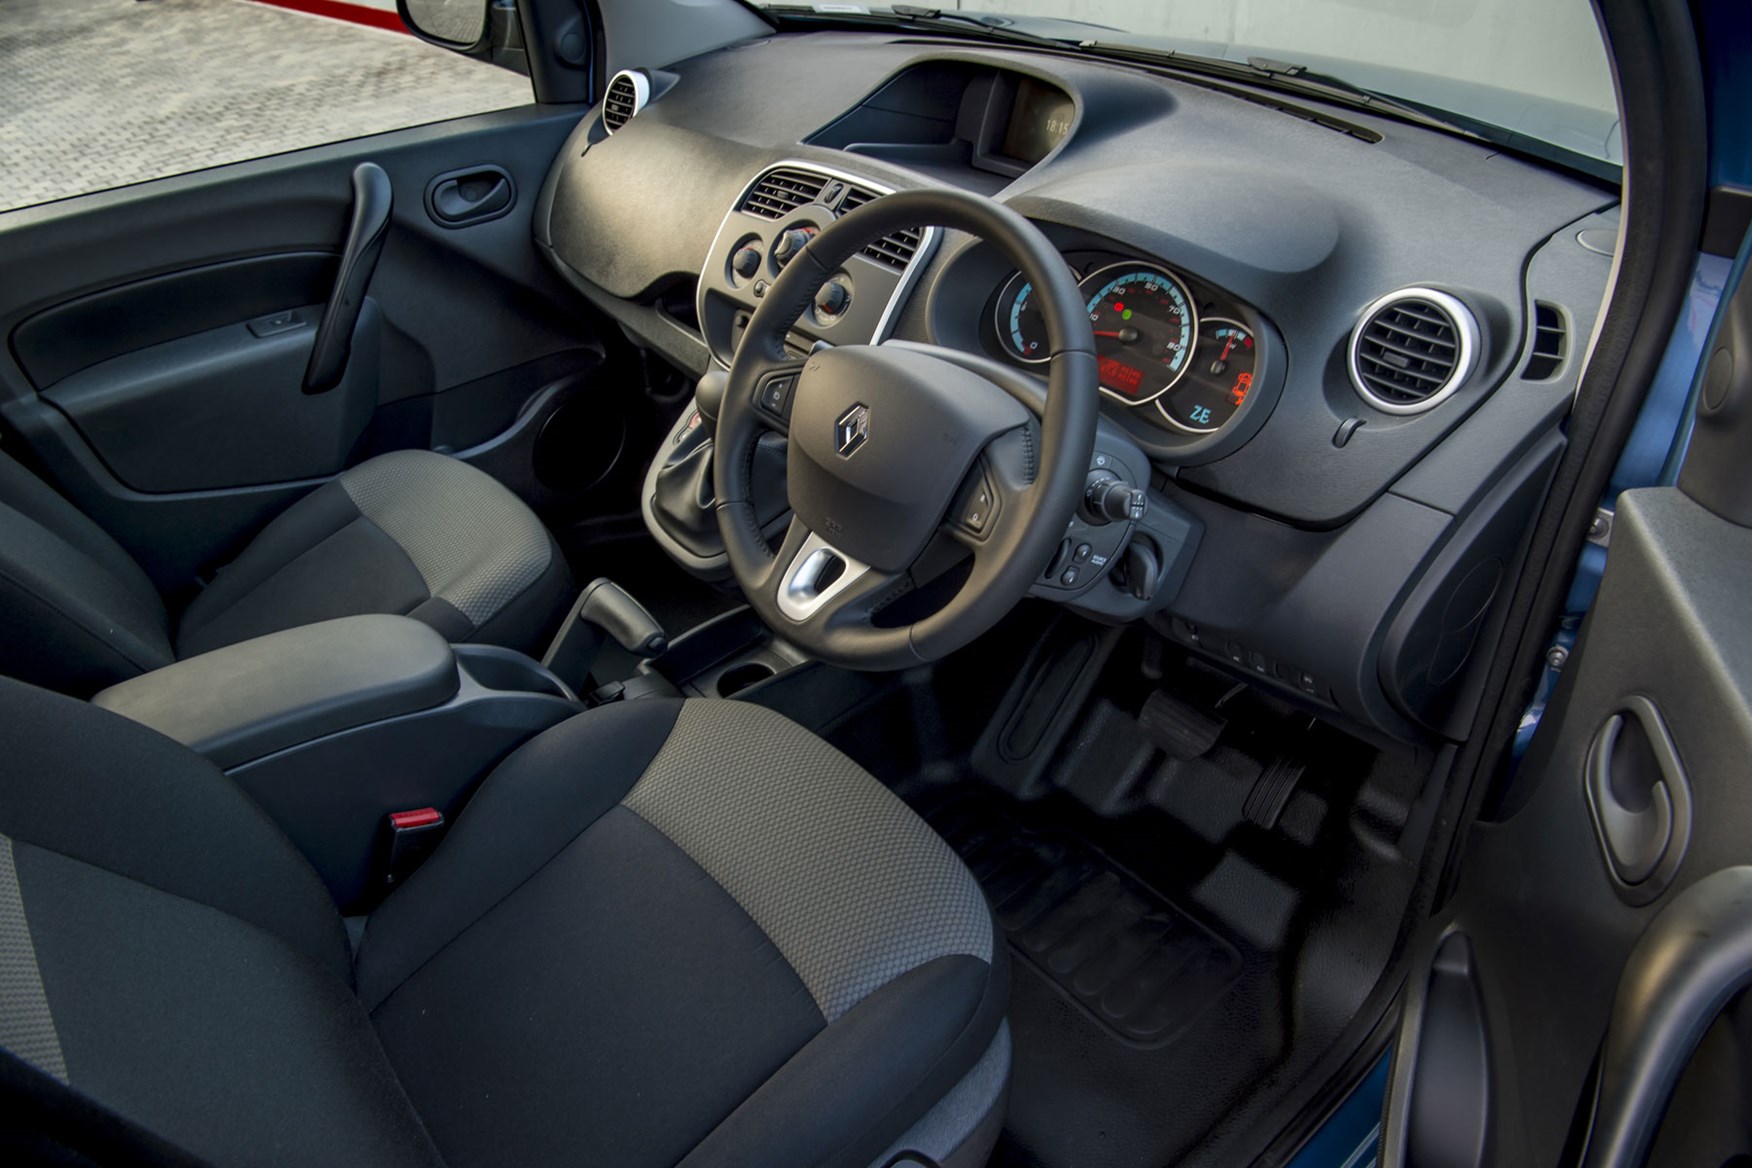 Renault Kangoo ZE review 2020 - cab interior, driver's side